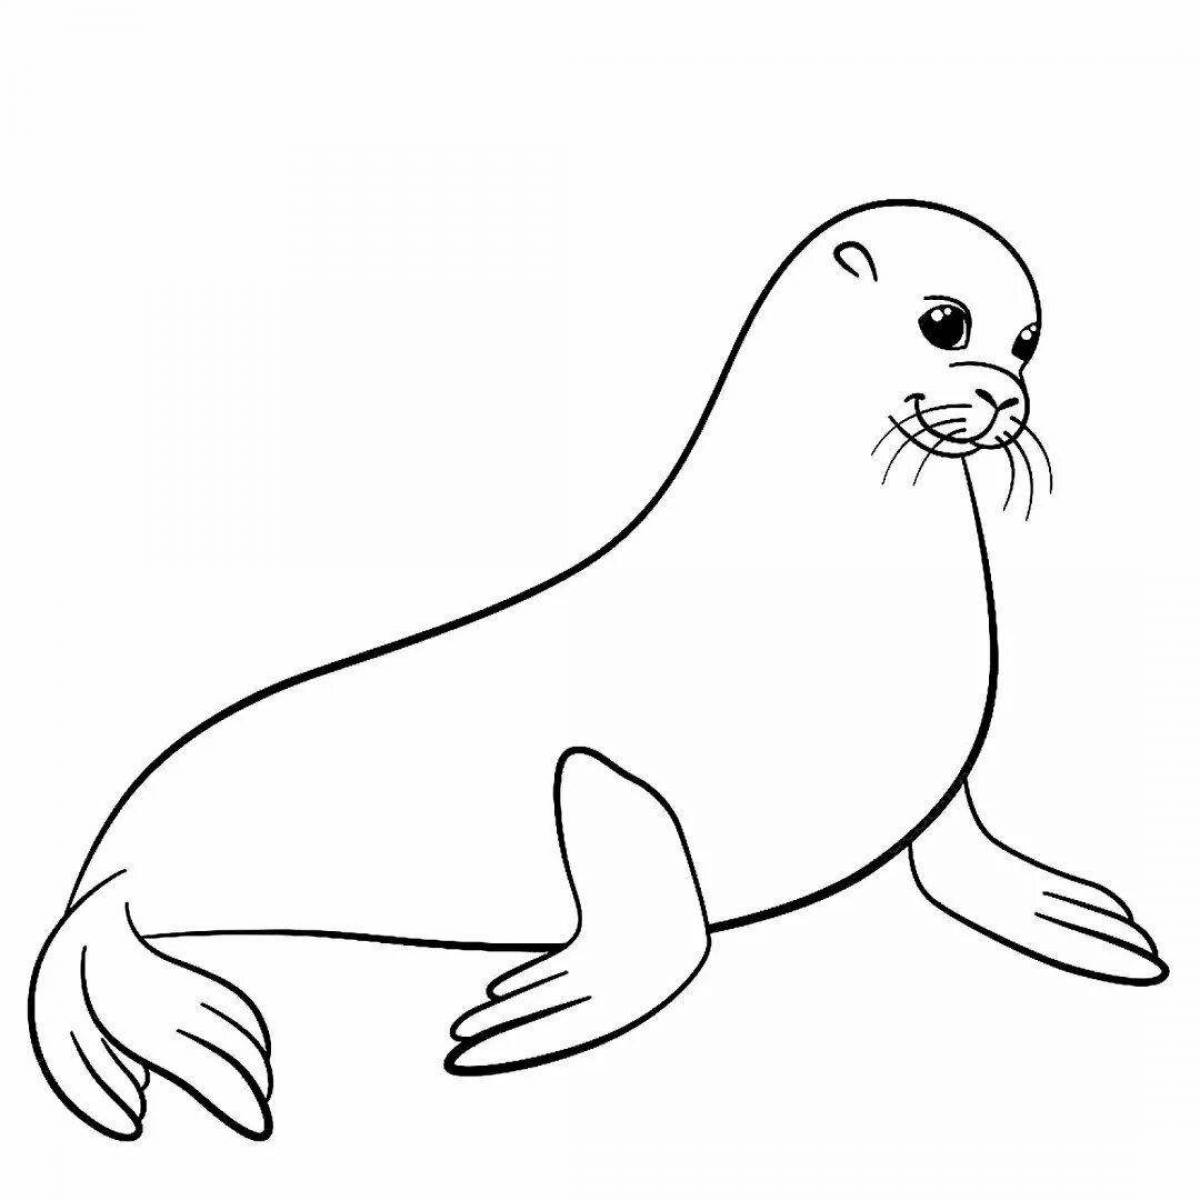 Wonderful Baikal seal coloring book for kids